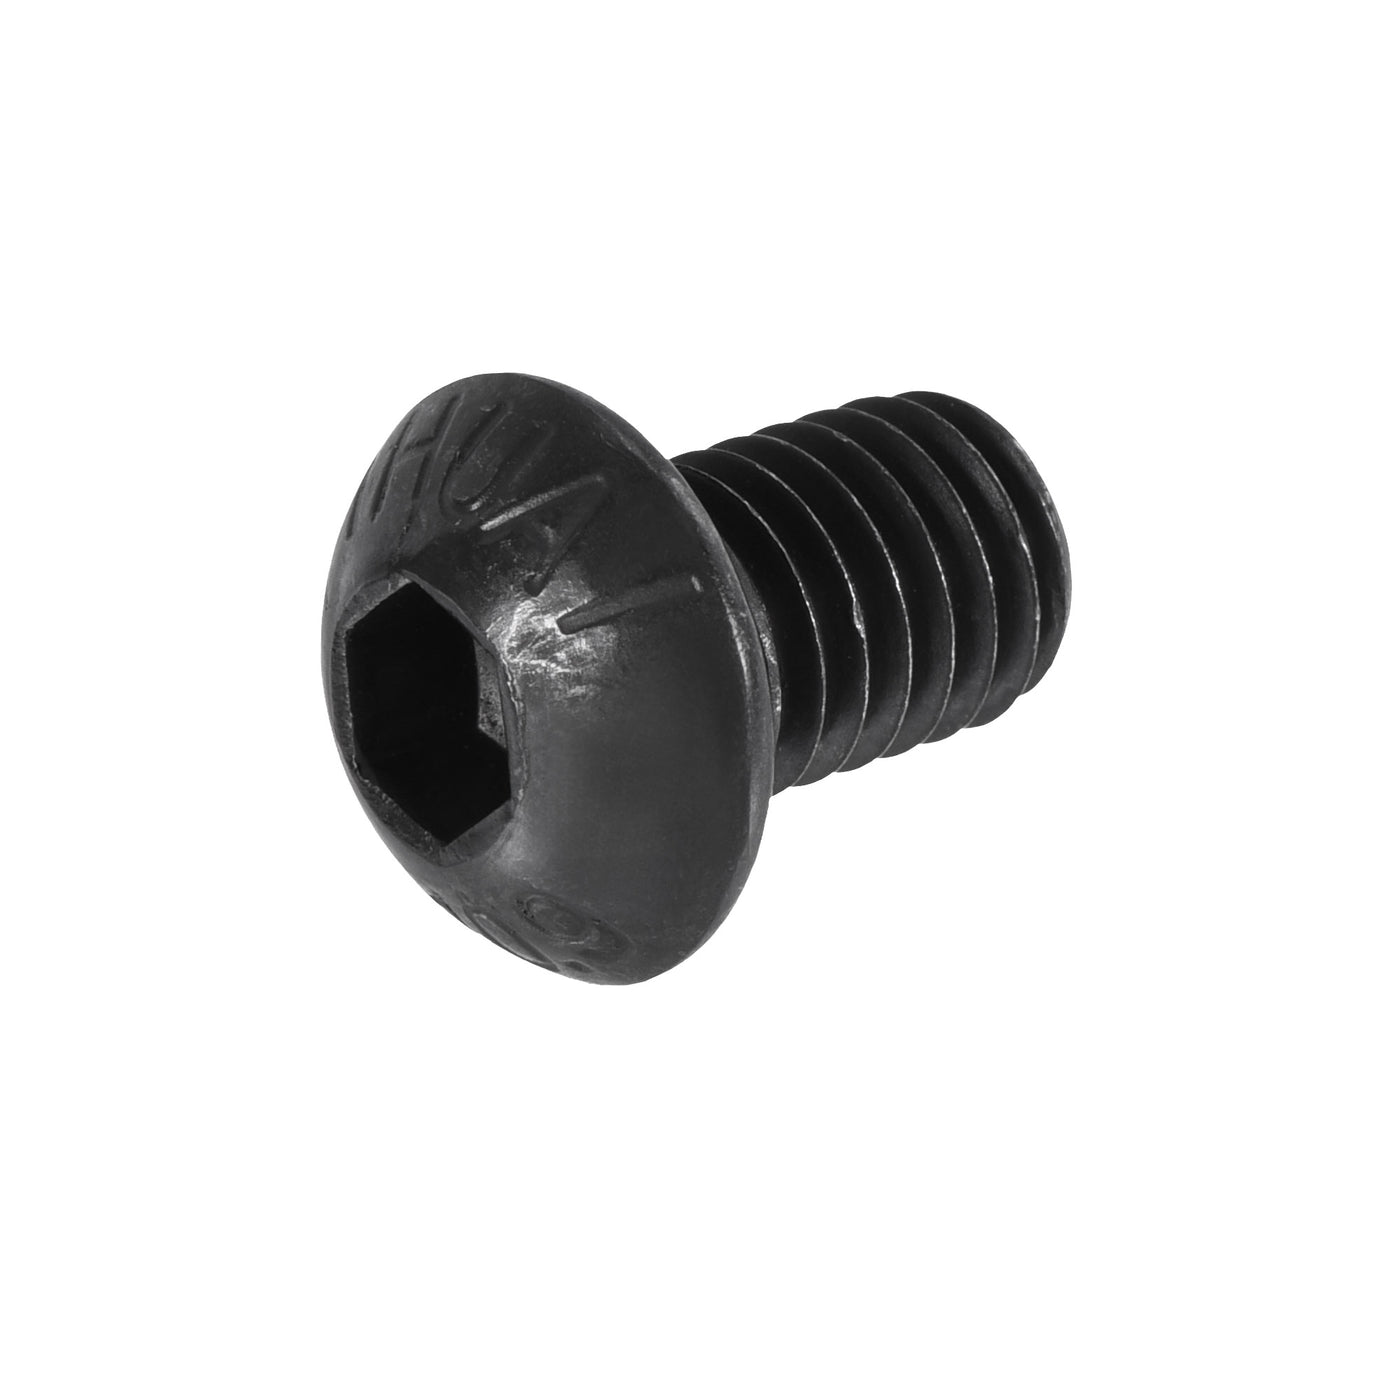 uxcell Uxcell M8x12mm Hex Socket Button Head Cap Bolts Screws Carbon Steel 100pcs